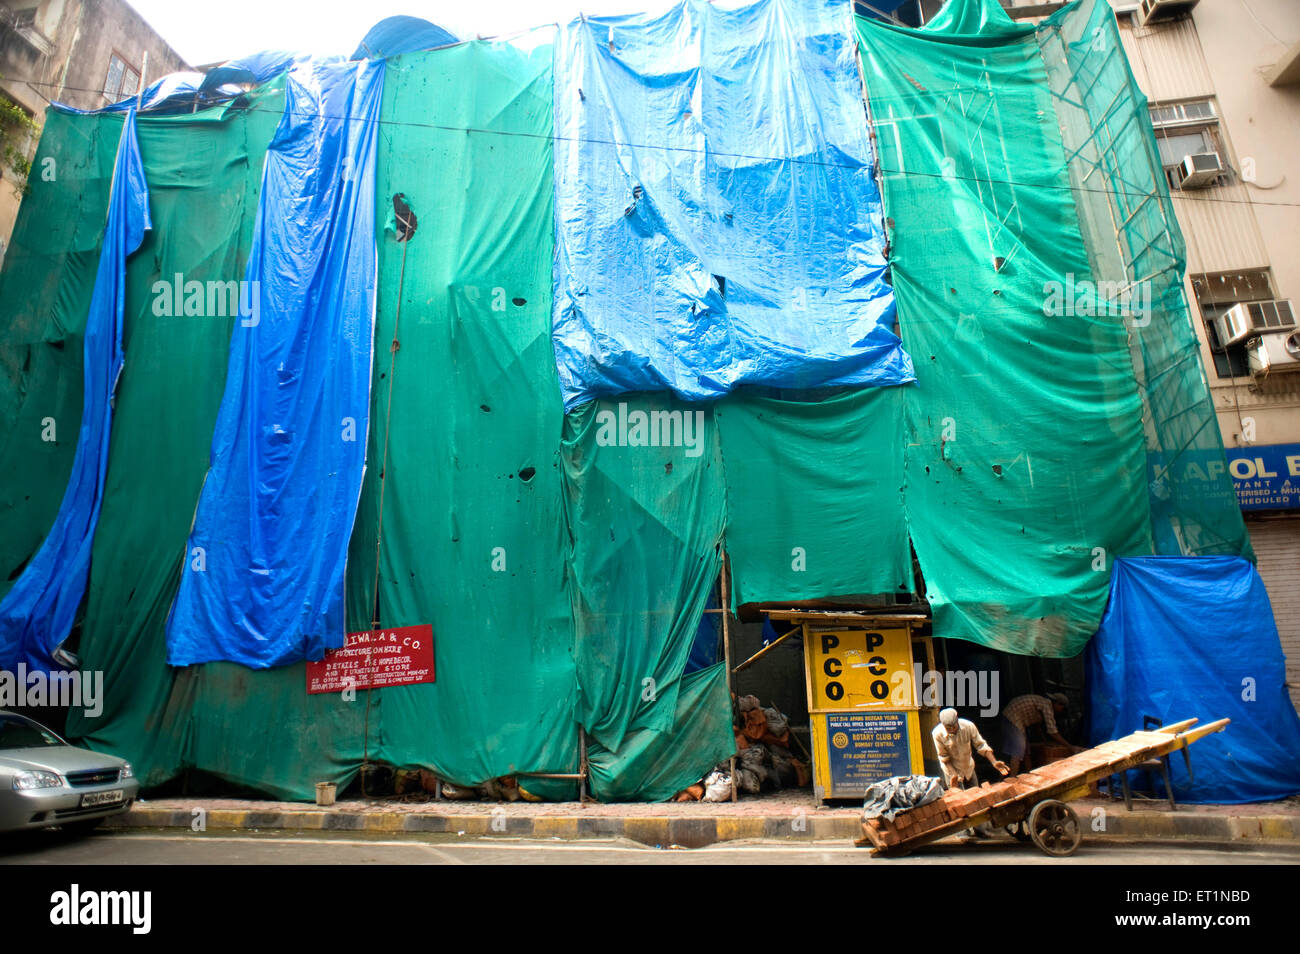 Telone copertura telone di plastica telone impermeabile tenda in cantiere a Bombay Mumbai Maharashtra India Foto Stock